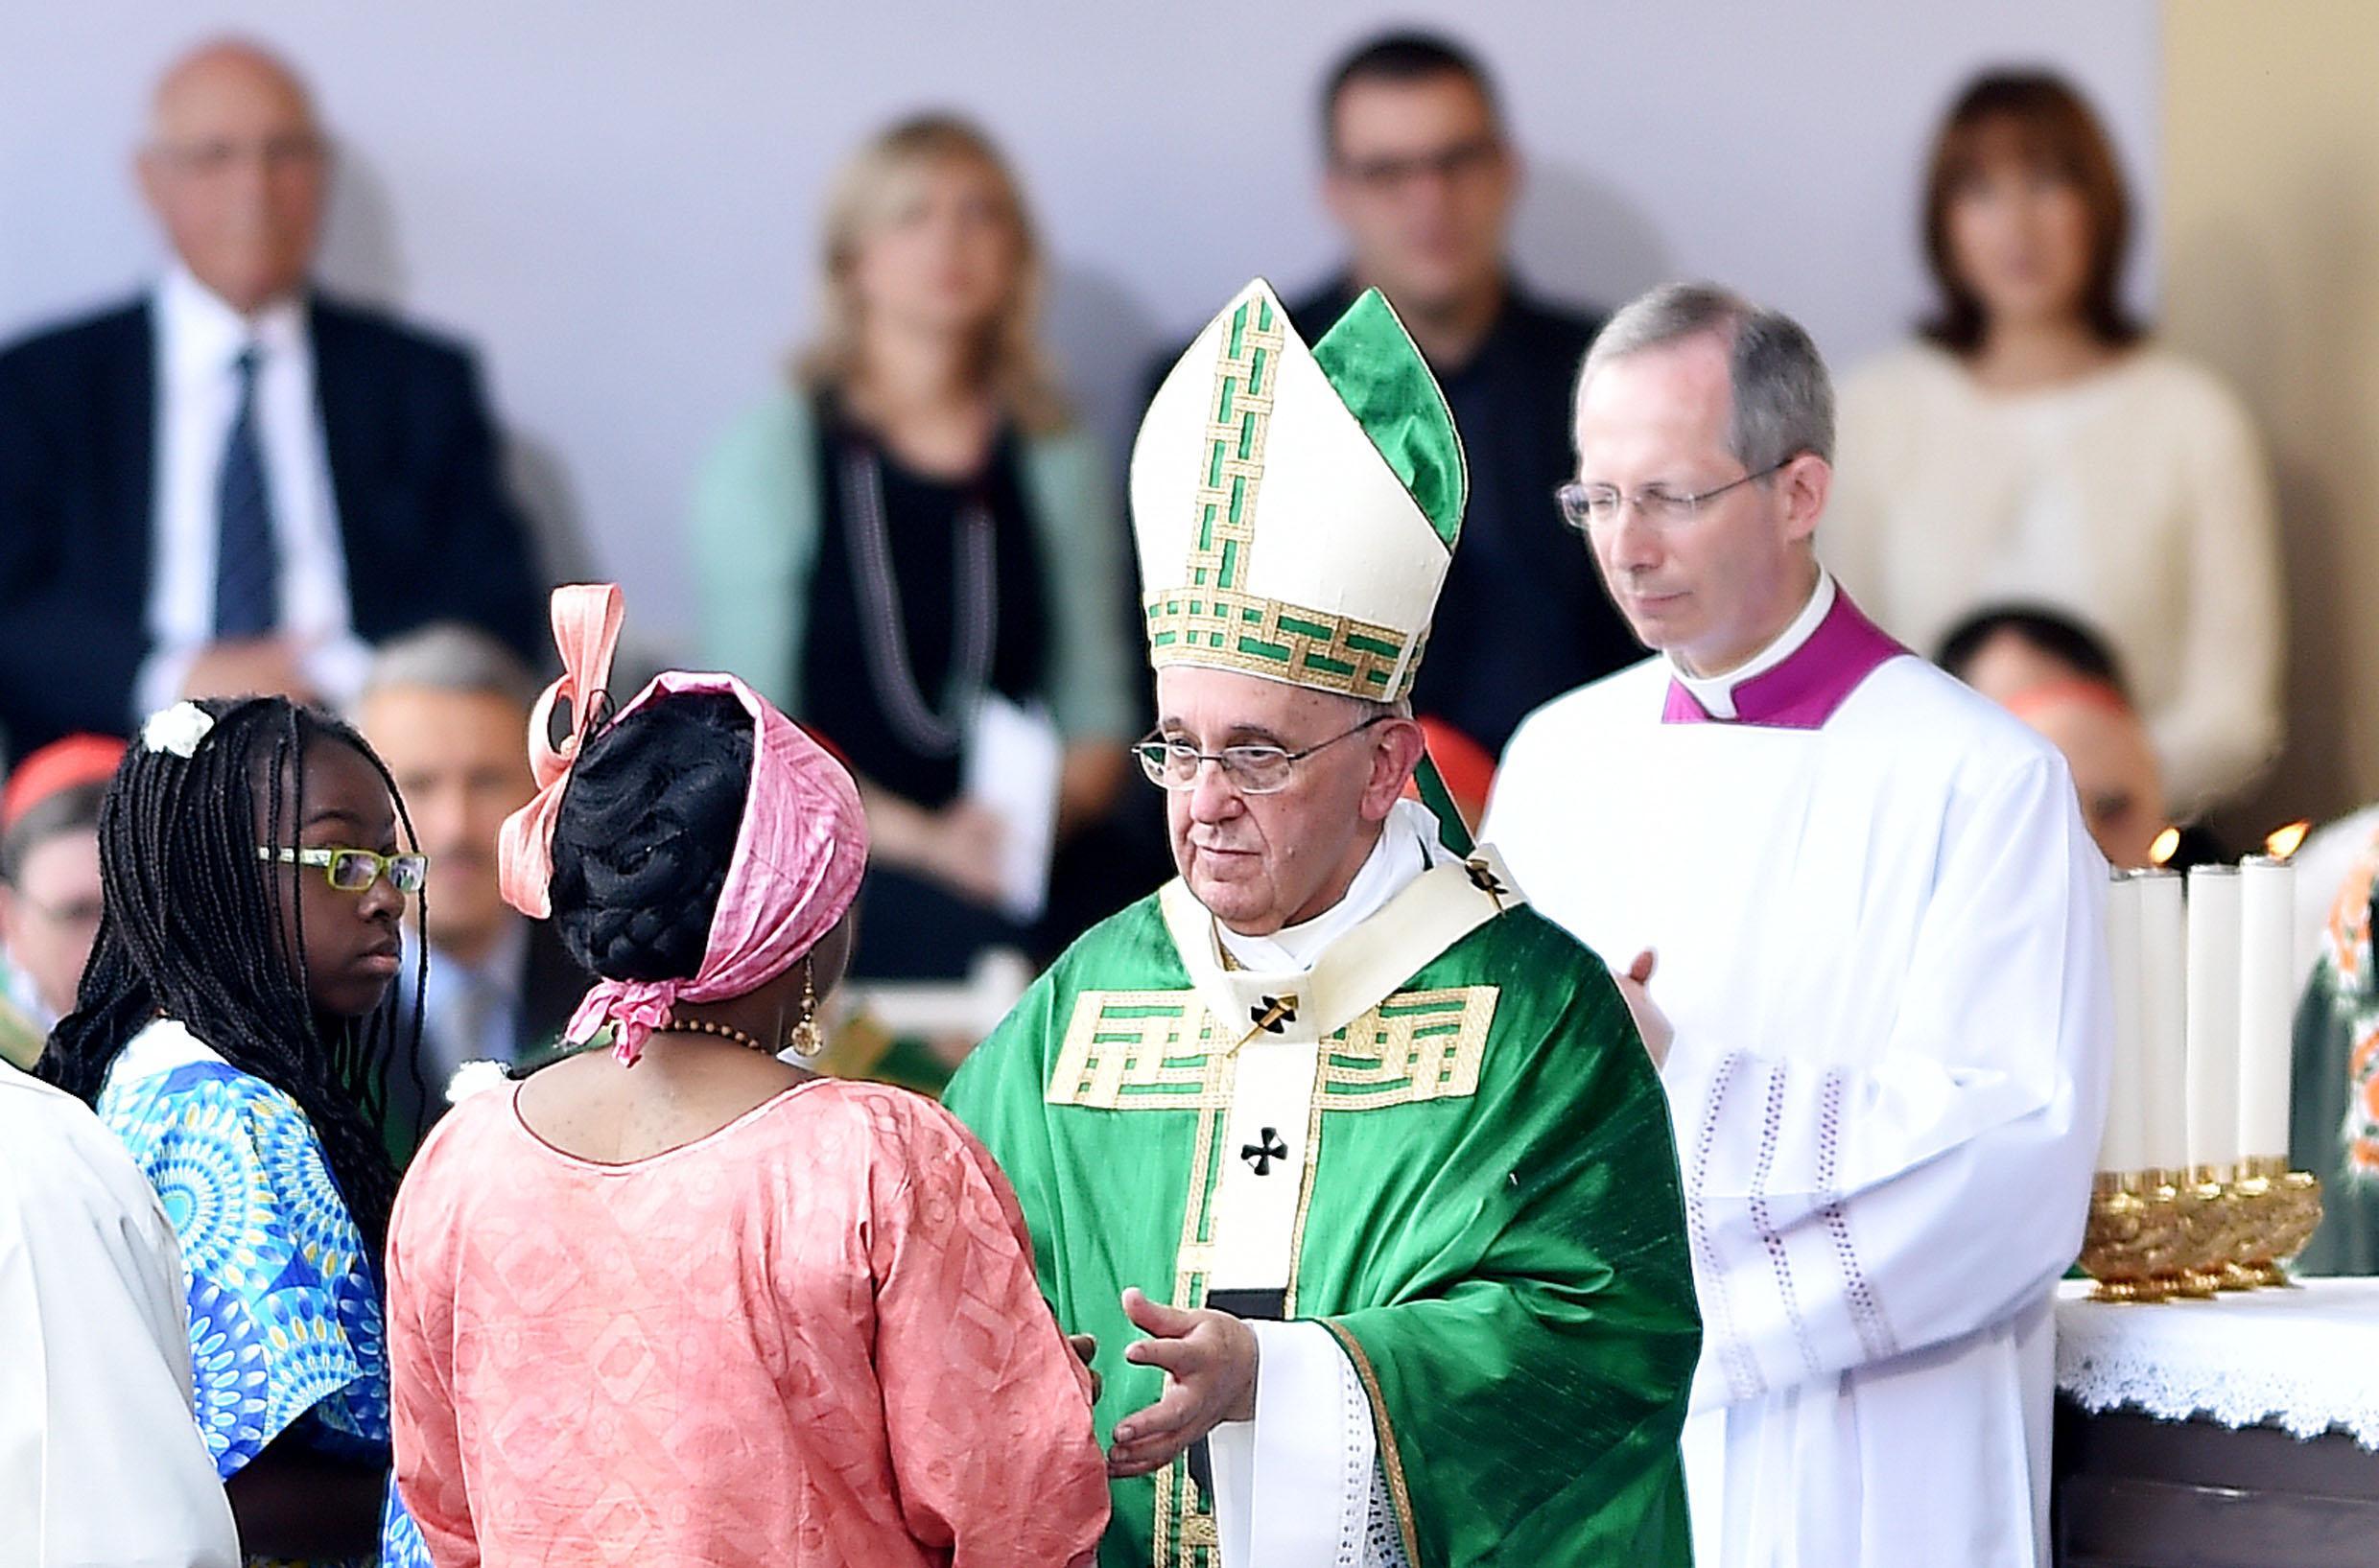 Pope Francis during Mass in Turin's Vittorio Veneto square